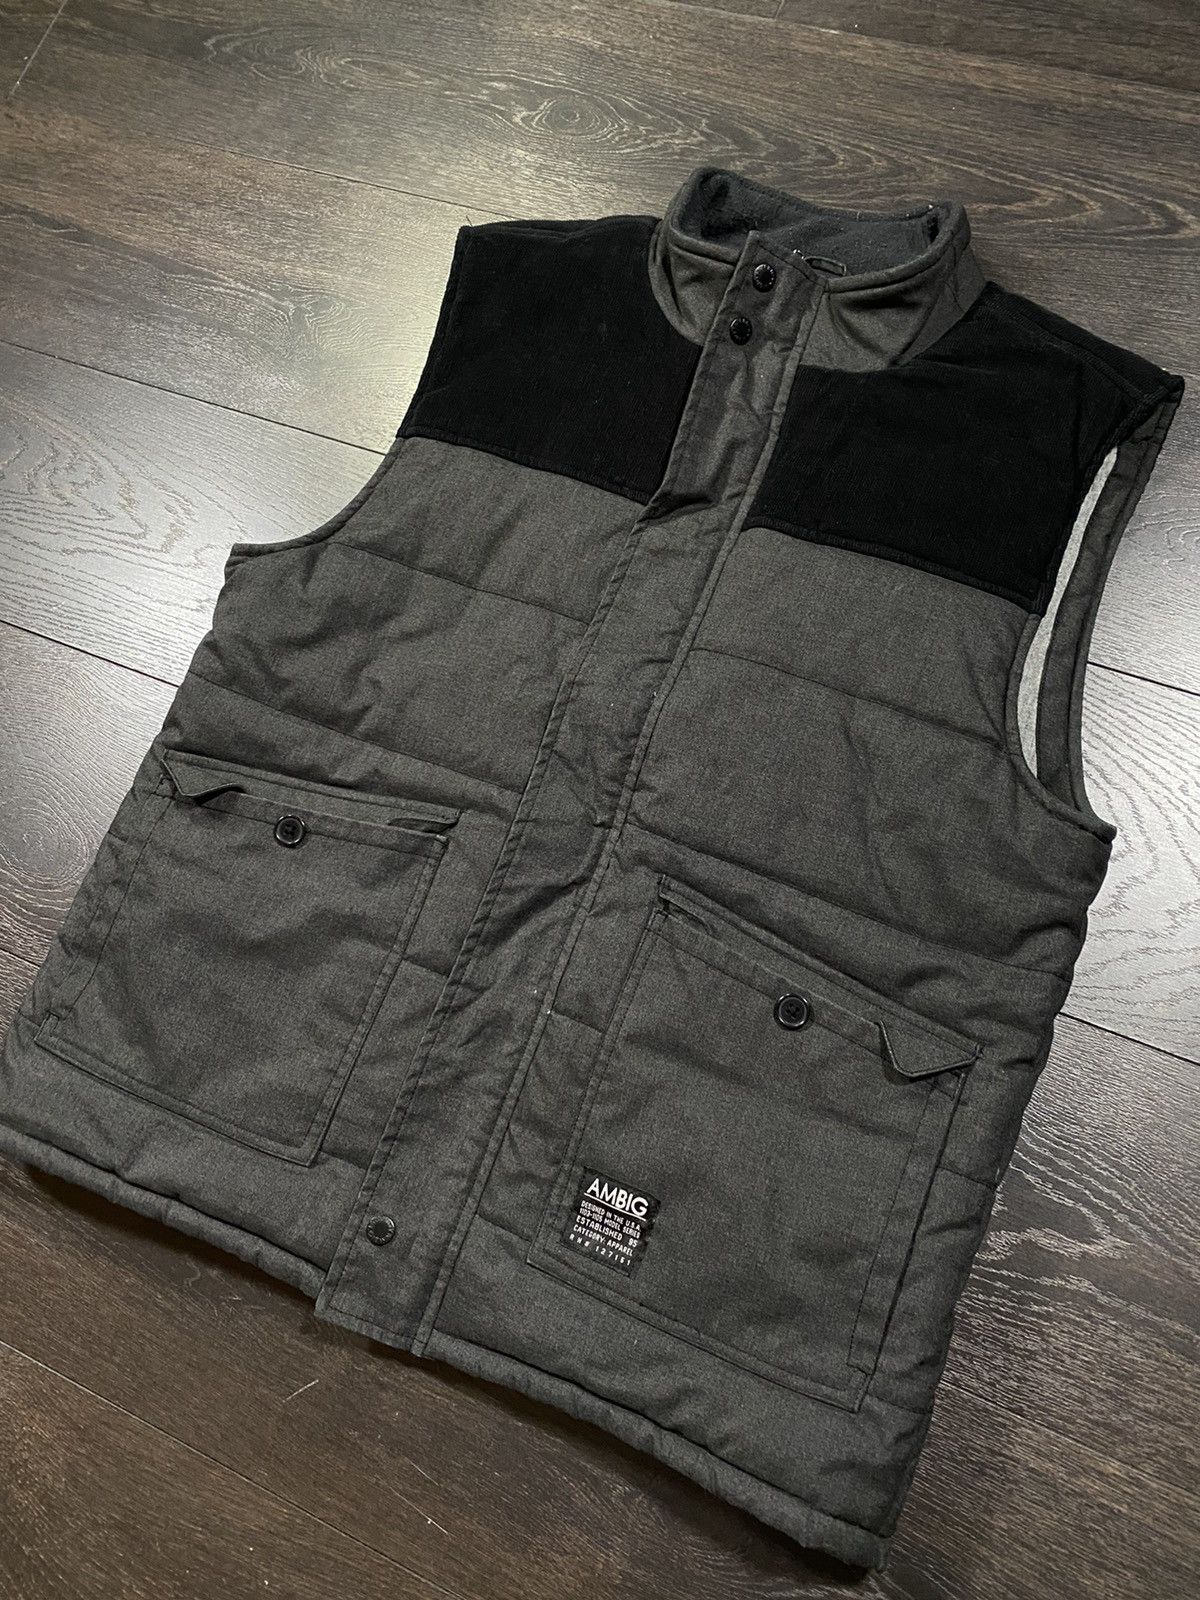 Ambig Ambig Black light puffer vest streetwear | Grailed